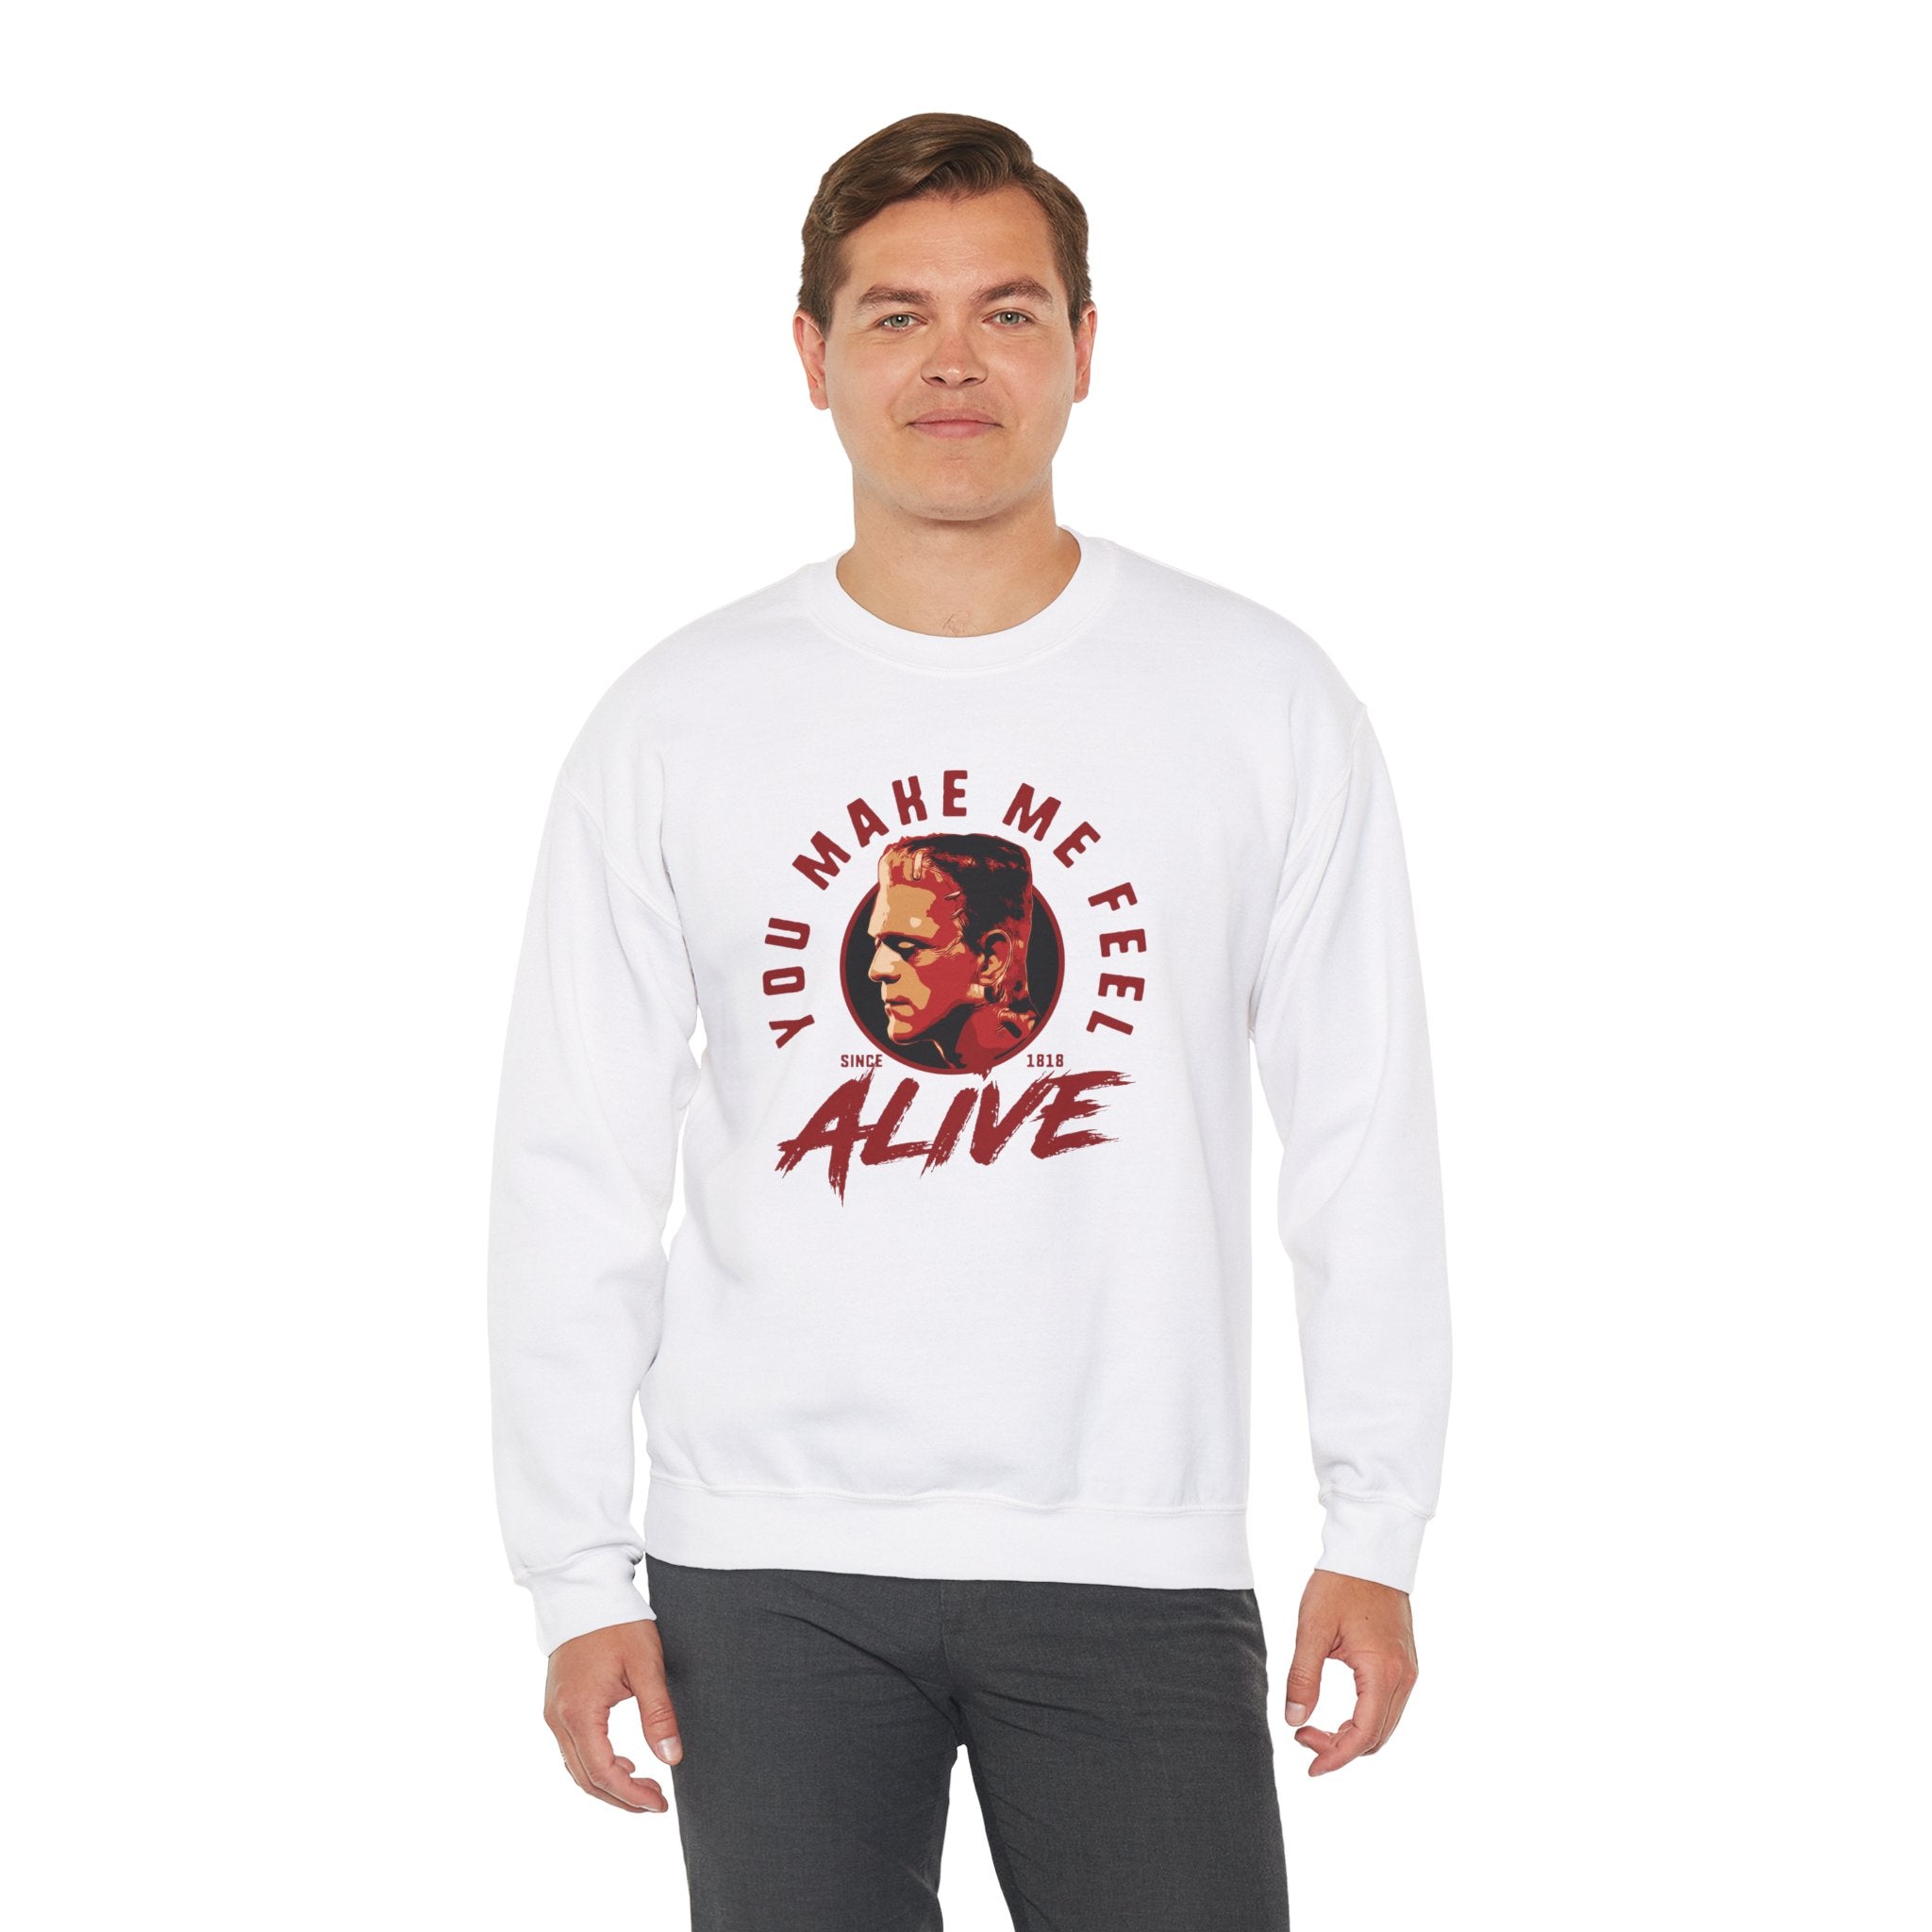 Alive -  Sweatshirt